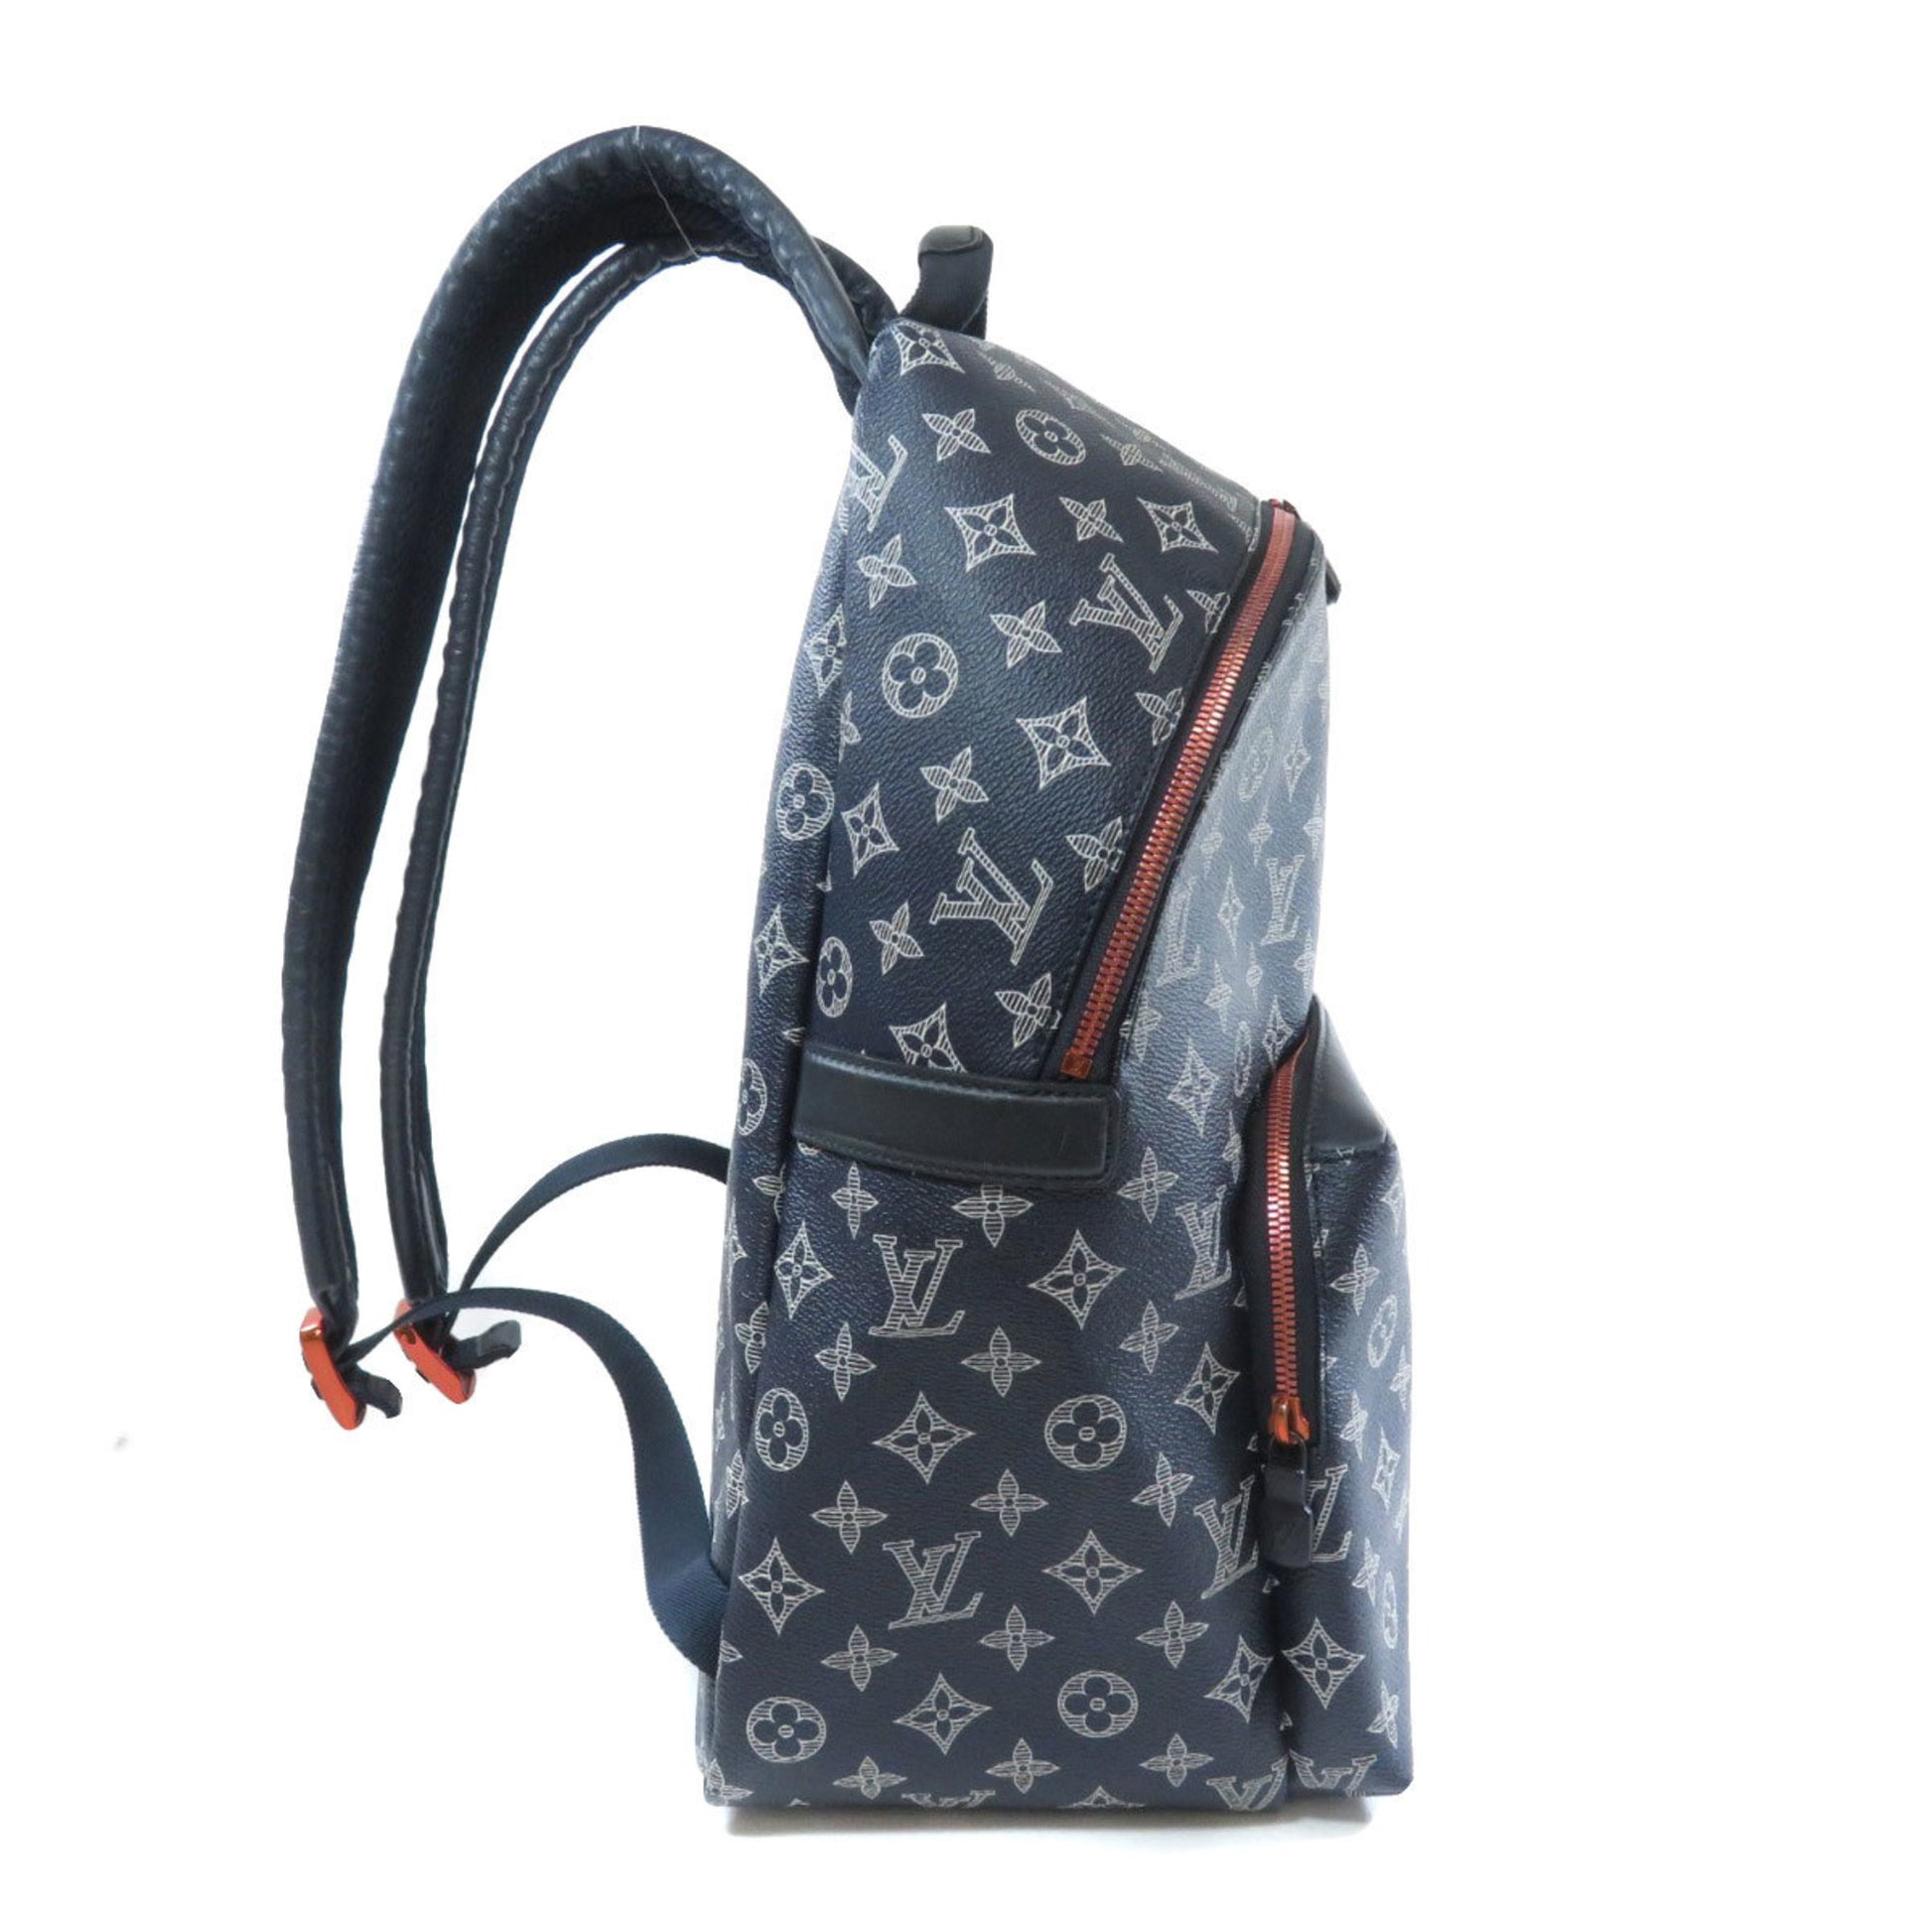 LOUIS VUITTON M43676 Monogram ink upside down Apollo backpack logo Backpack